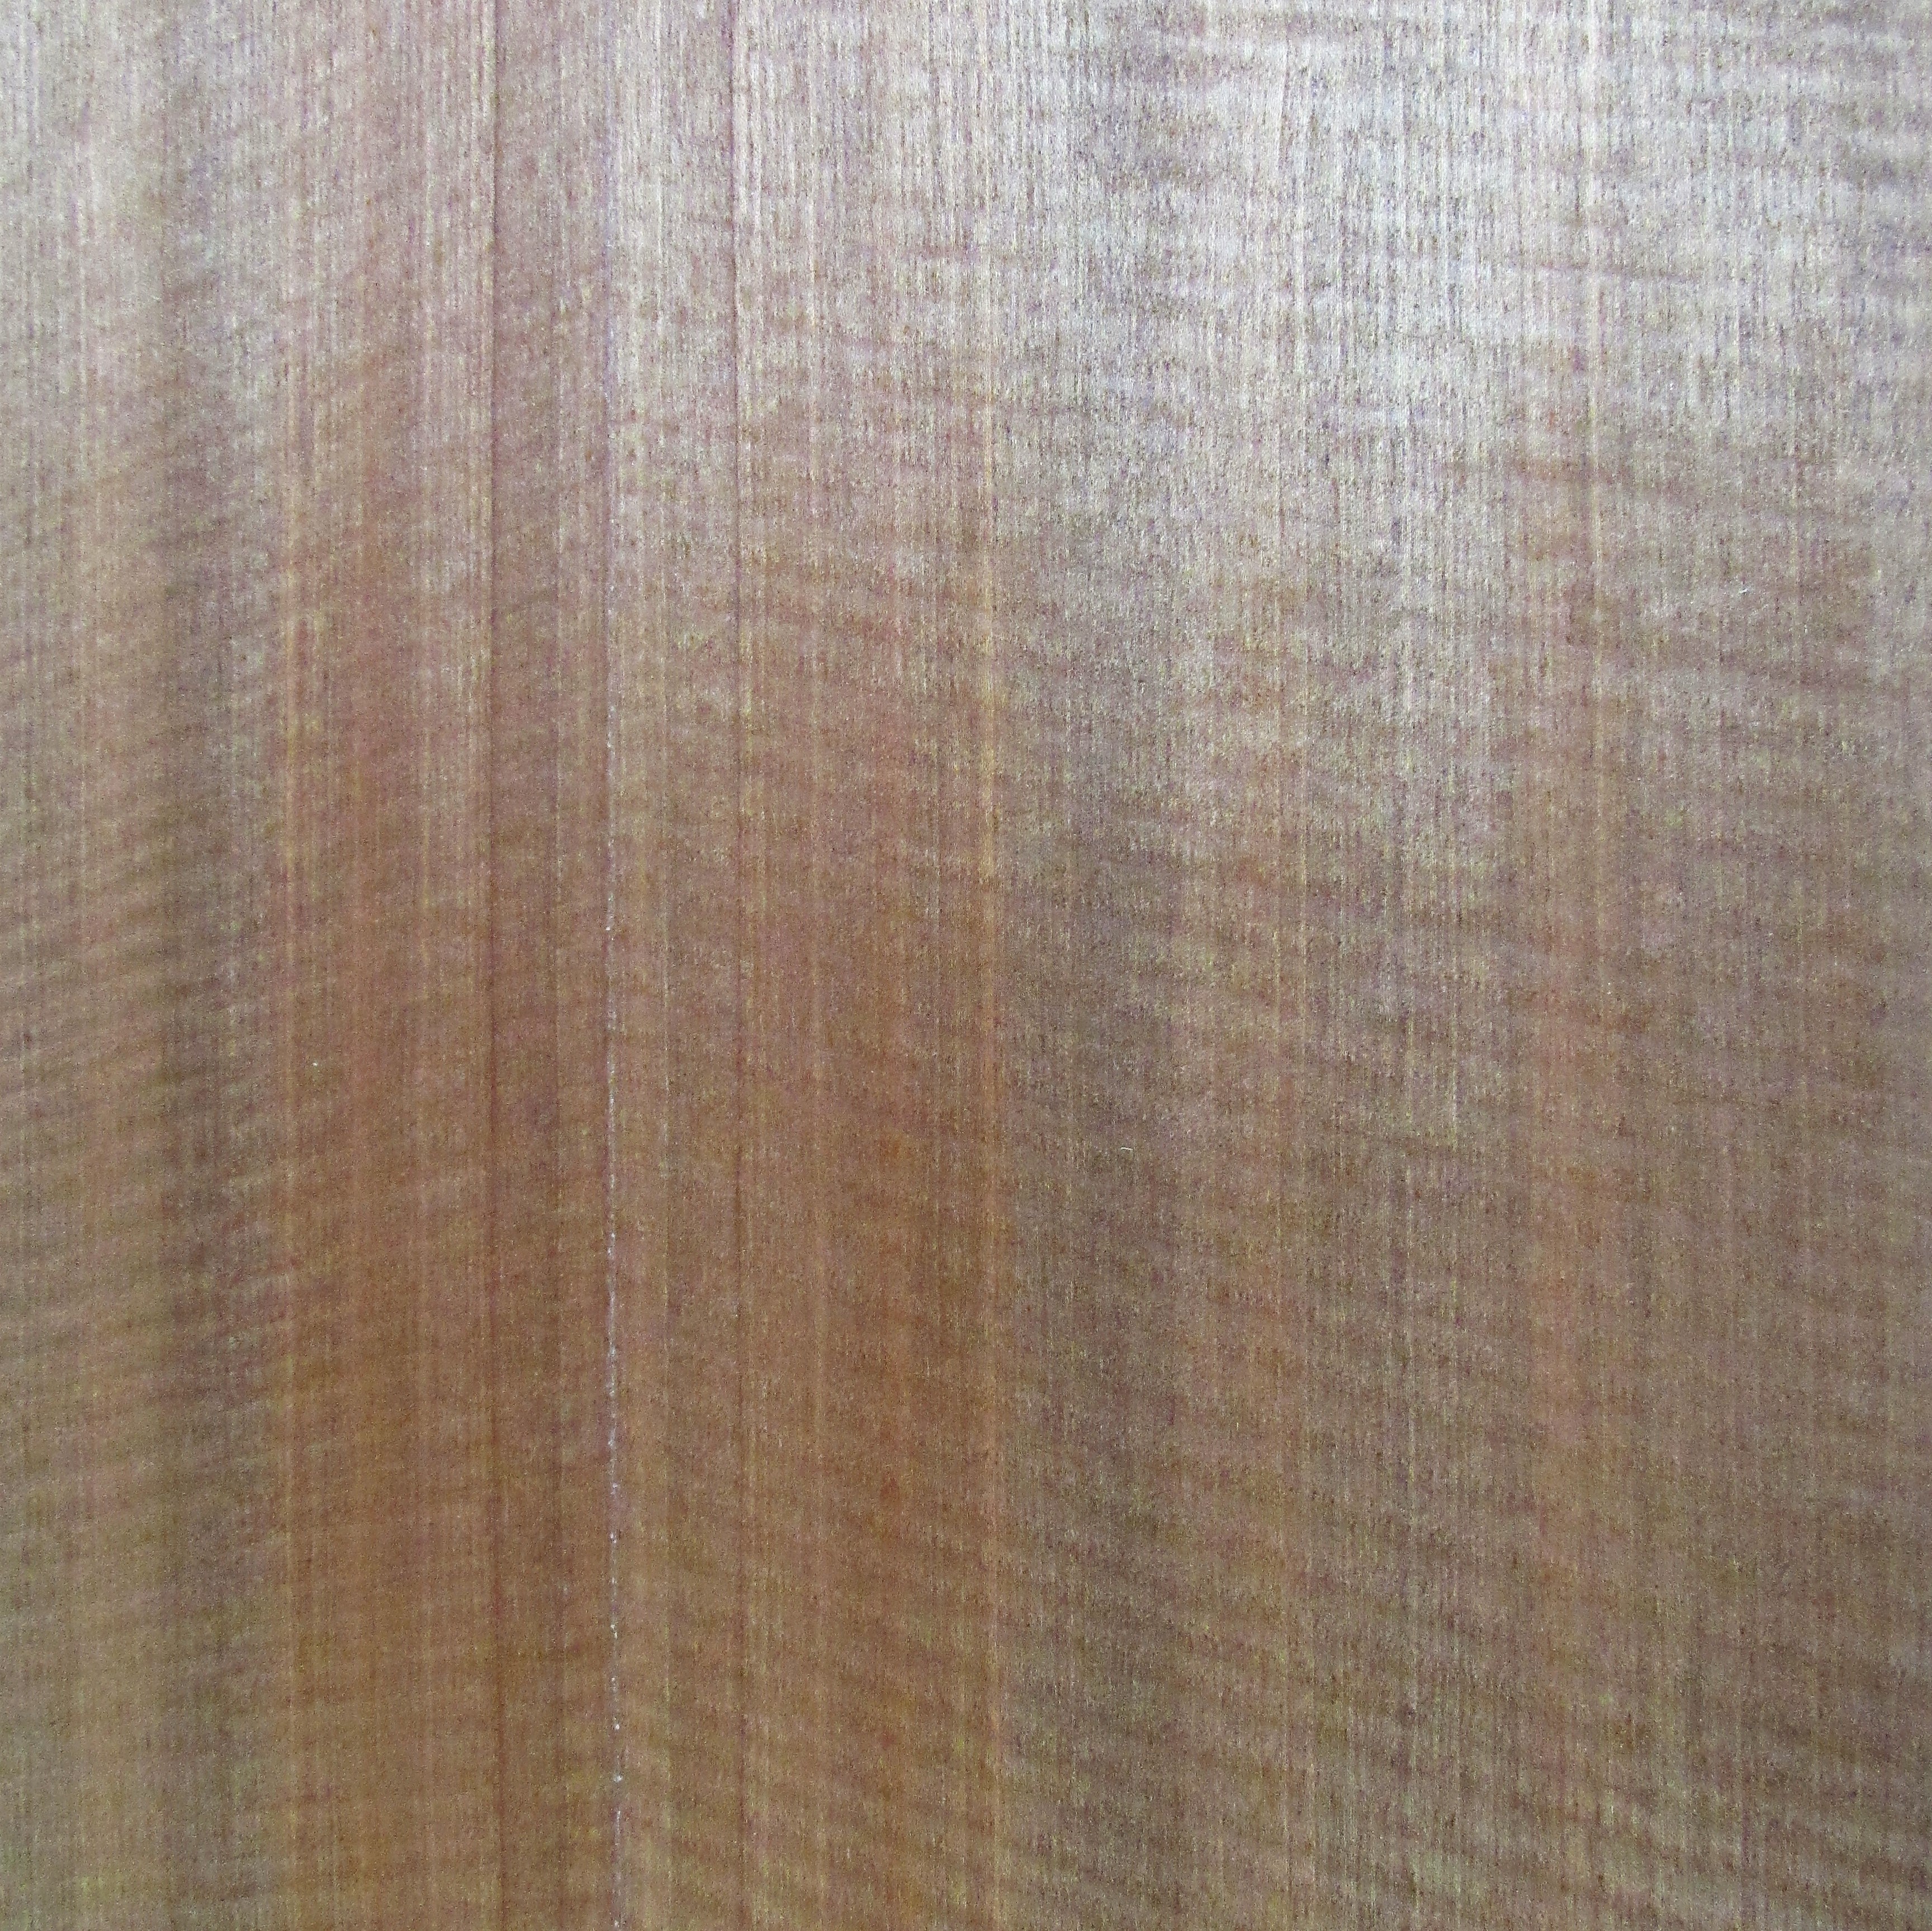 Close-up of Makore veneer panels